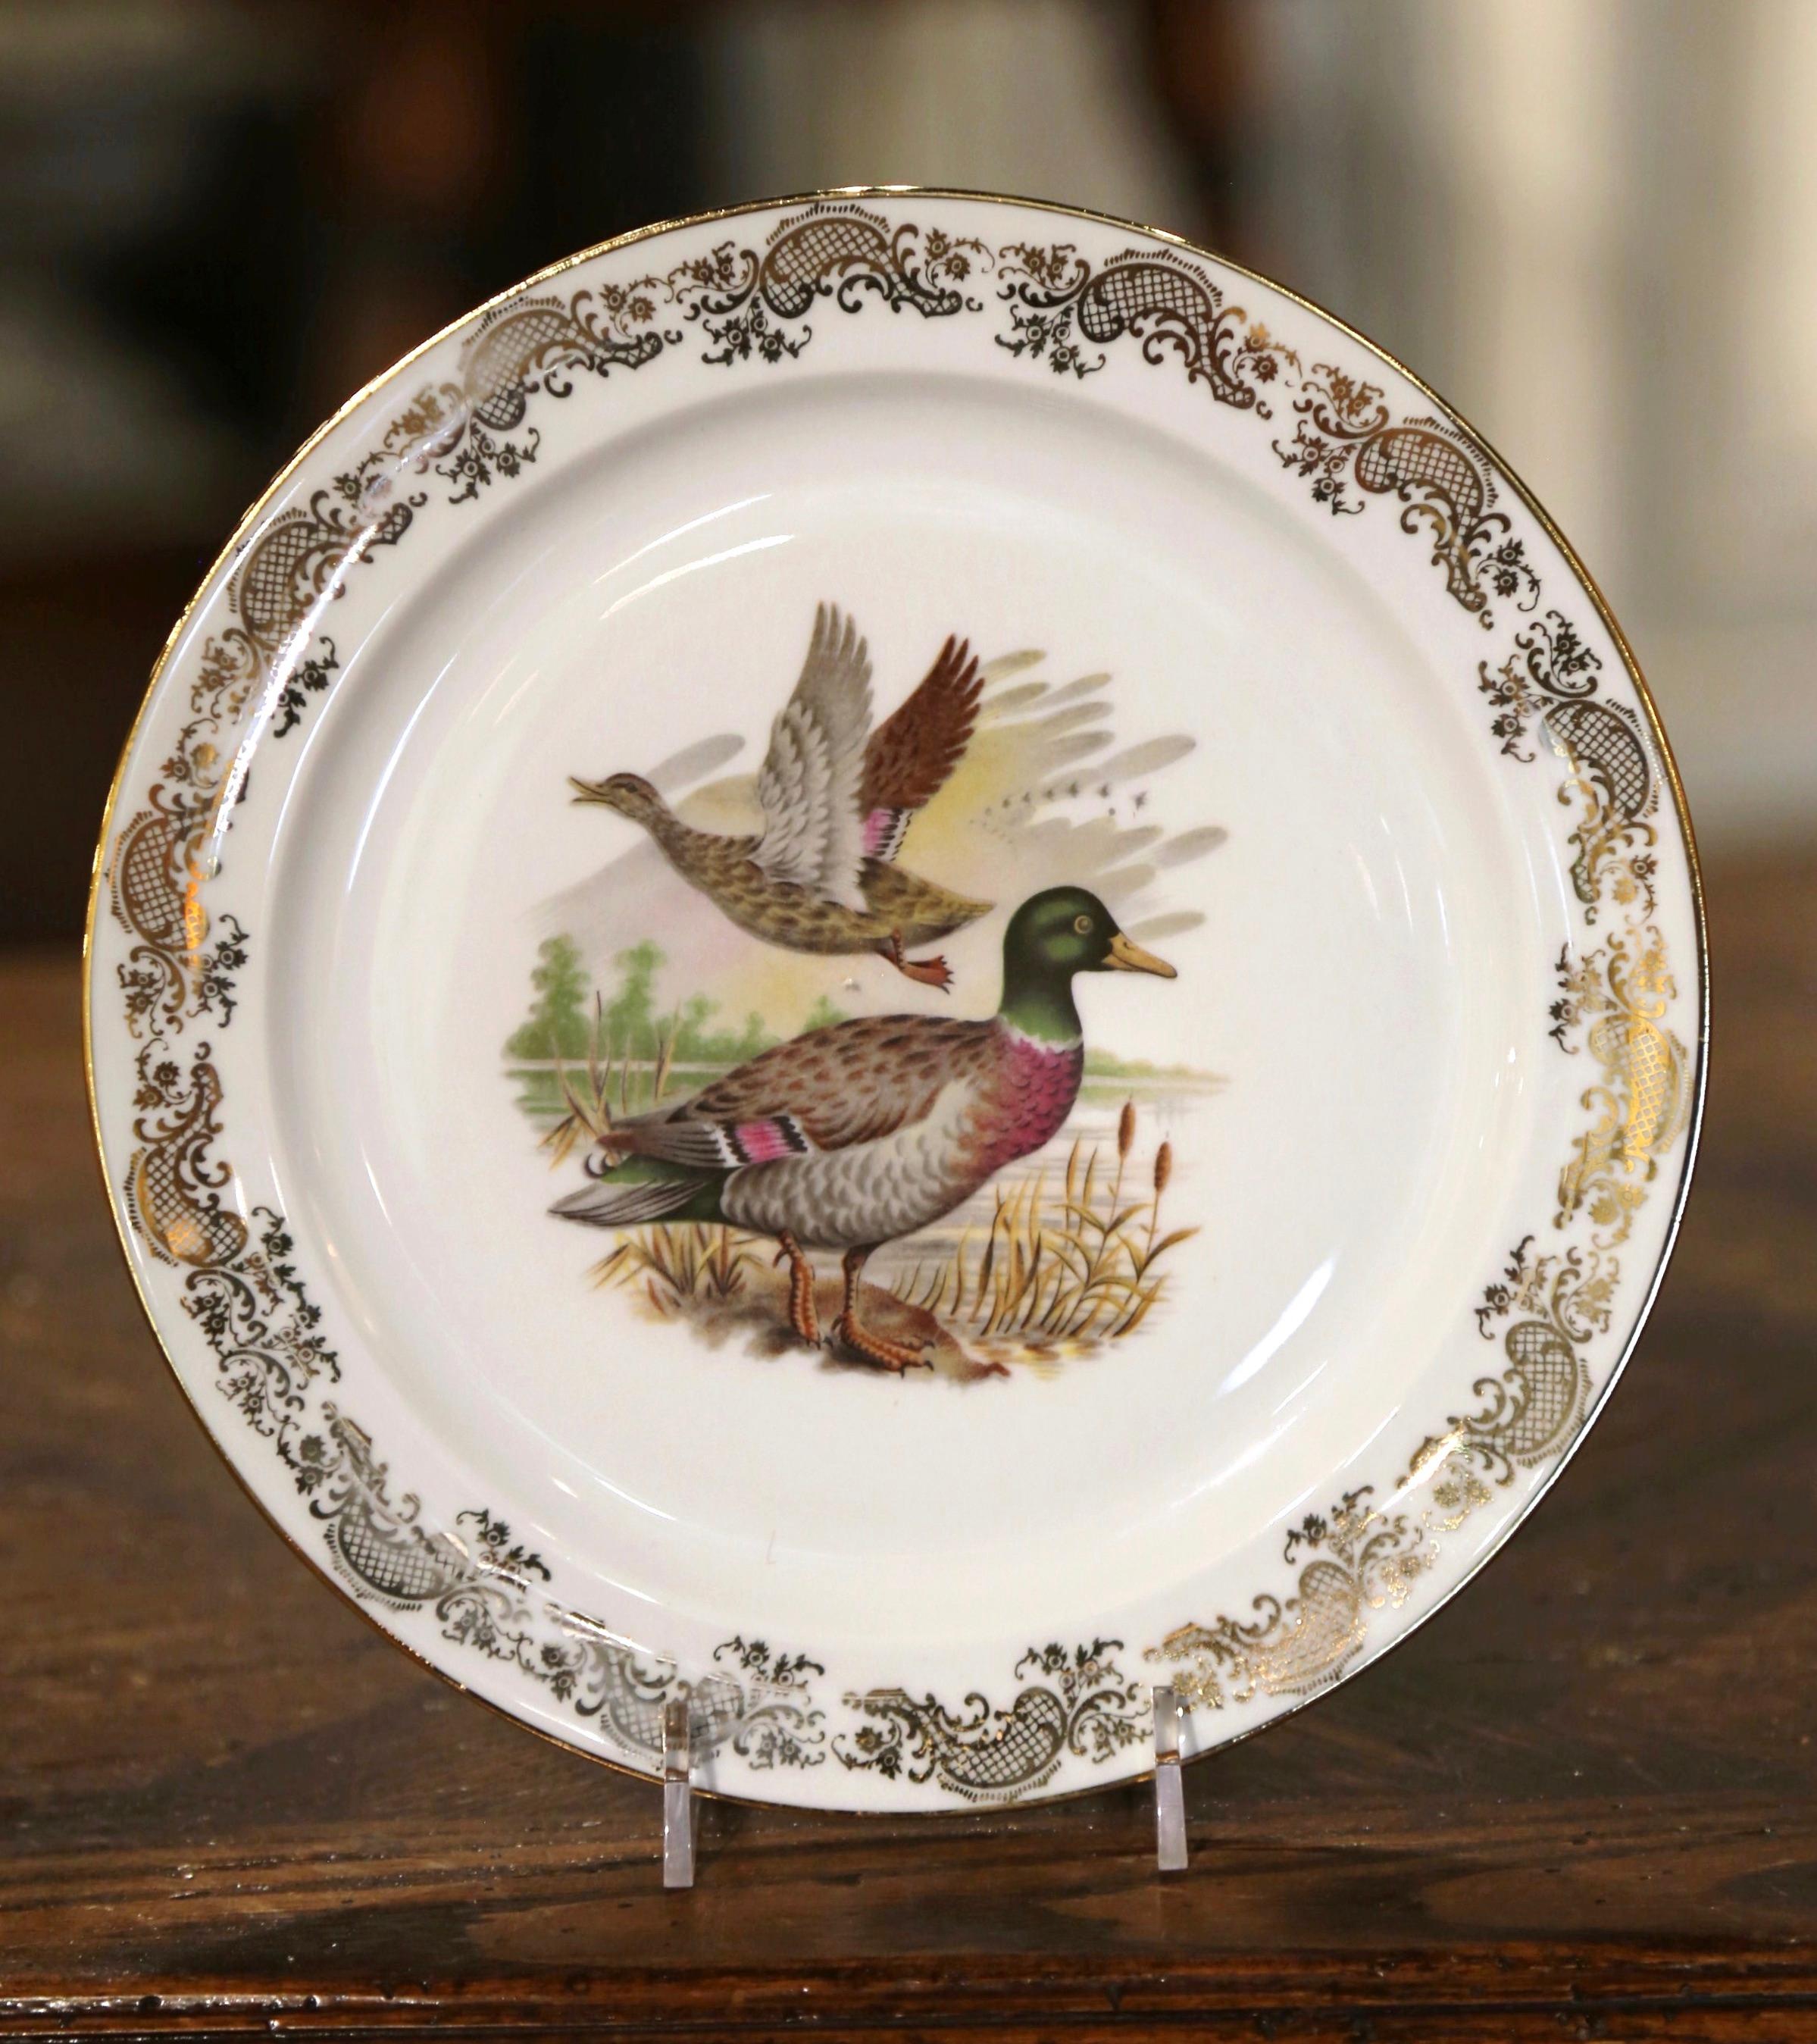  French Limoges Porcelain Service with Bird Motifs Signed Benoit - Set of 13 3